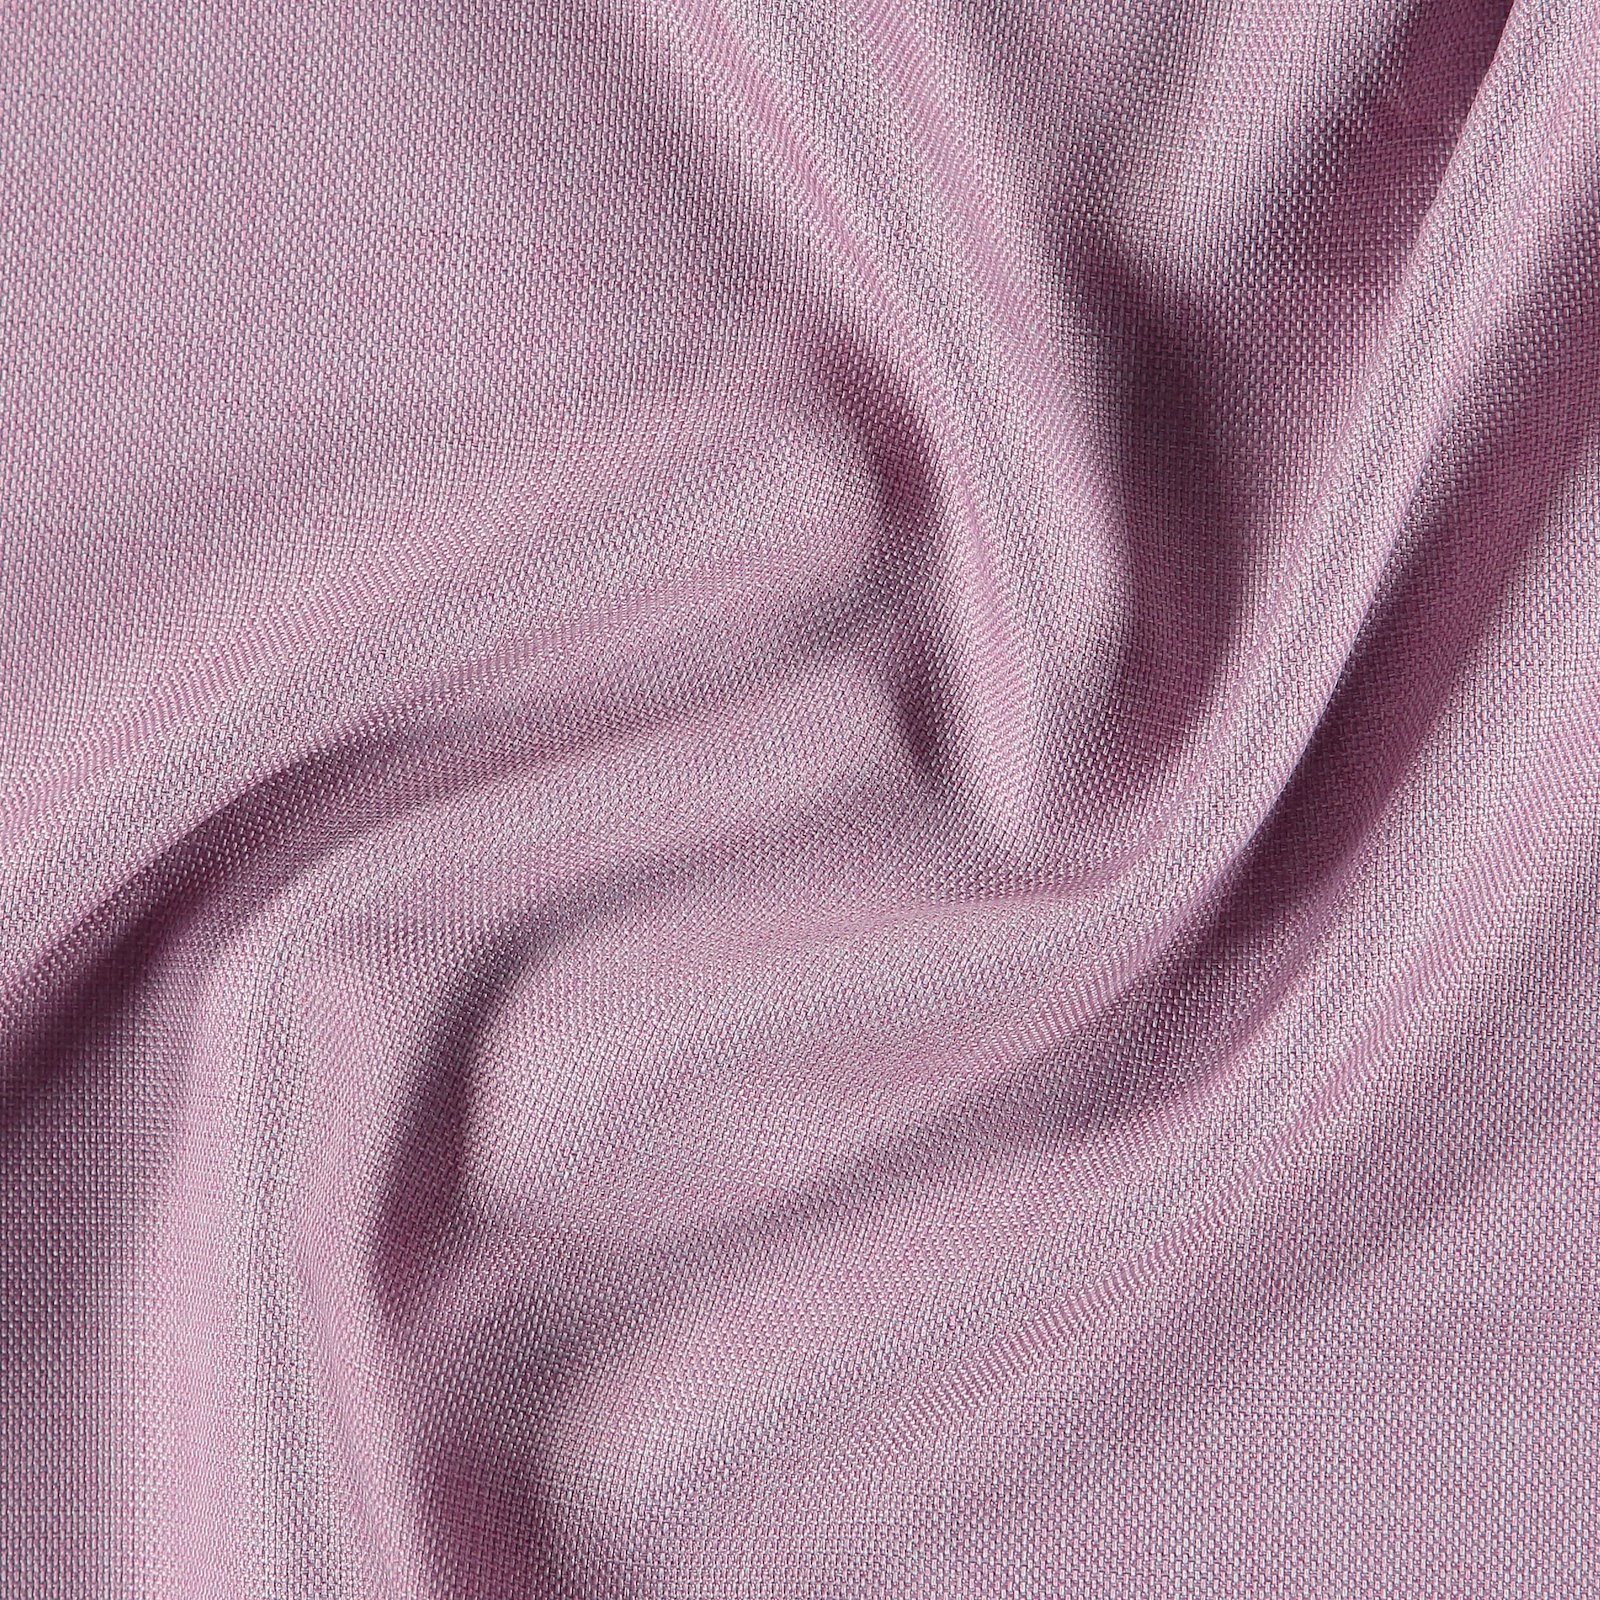 https://media.selfmade.com/images/upholstery-fabric-dusty-violet-melange-824164-pack.jpg?width=1600&height=1600&i=109417&ud=an5nwlkt3ag